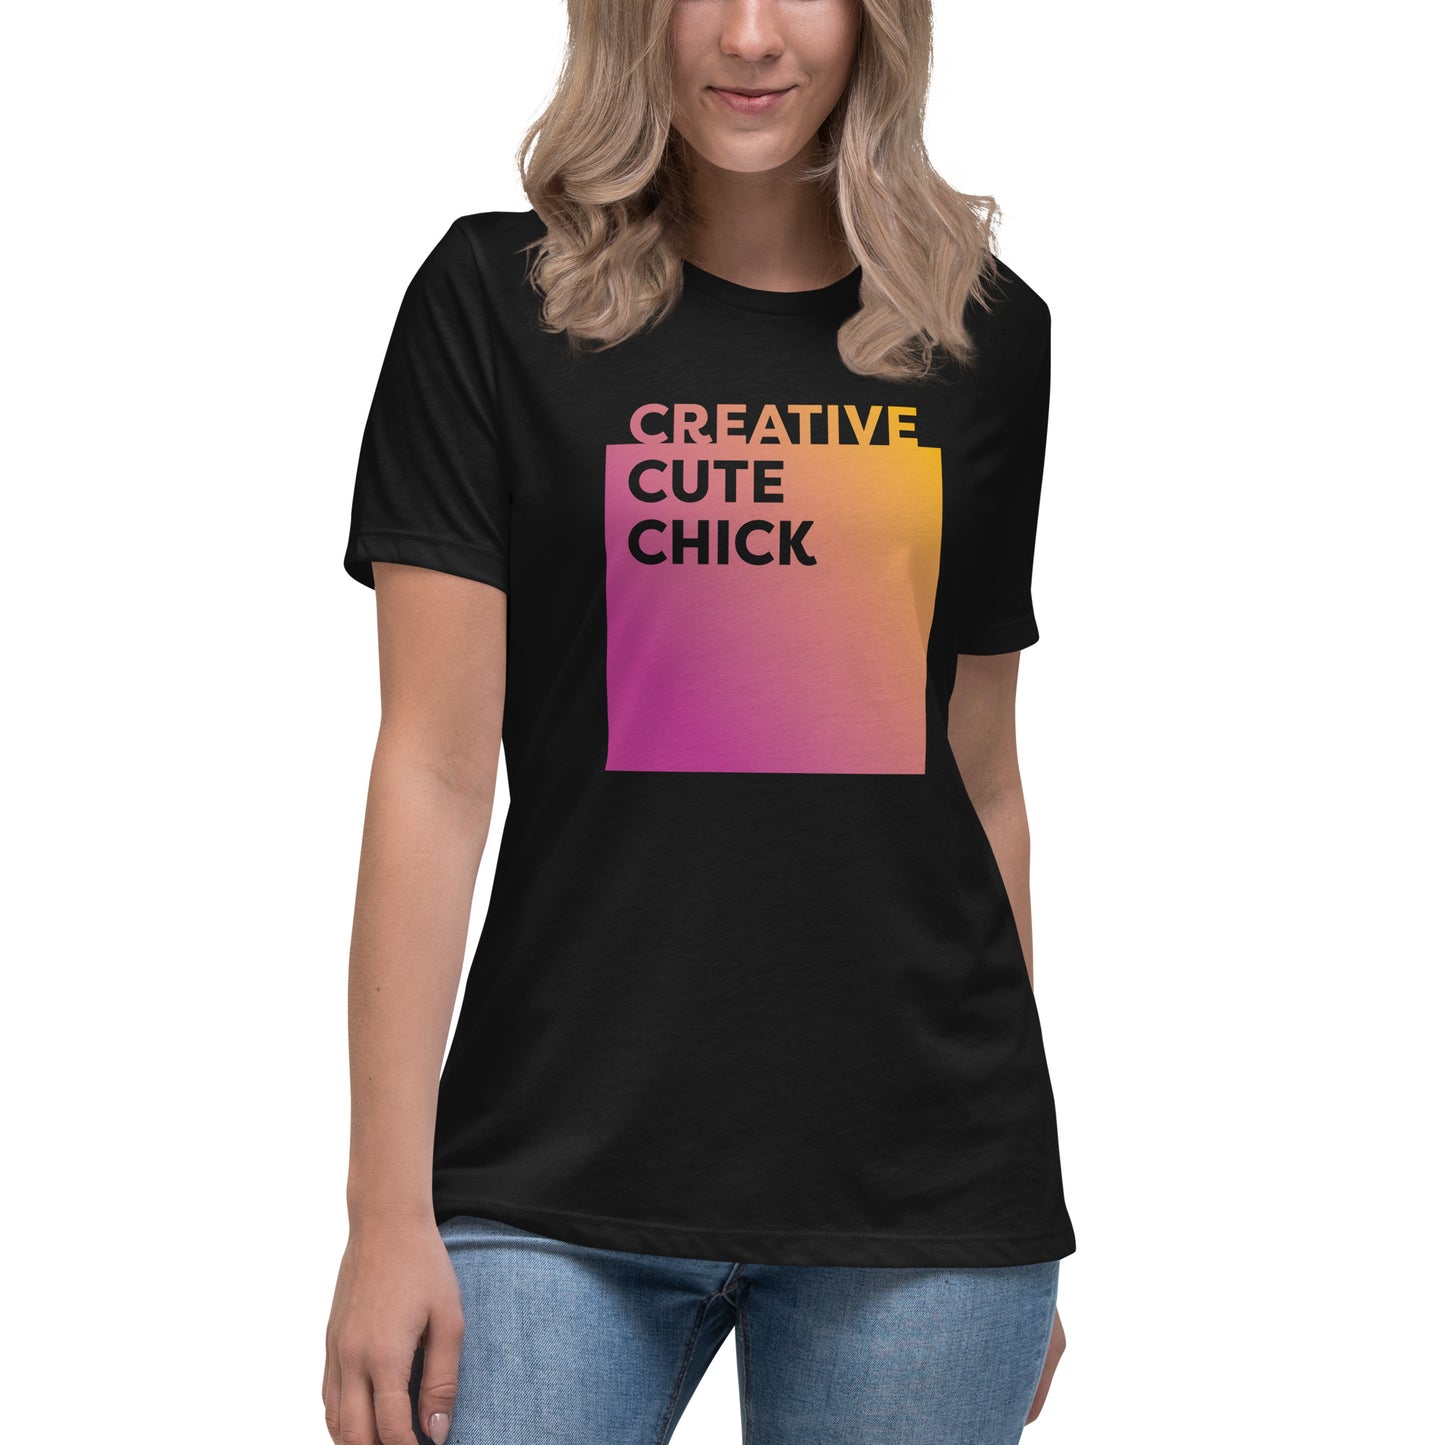 Creative Cute Chick Tshirt (Black)